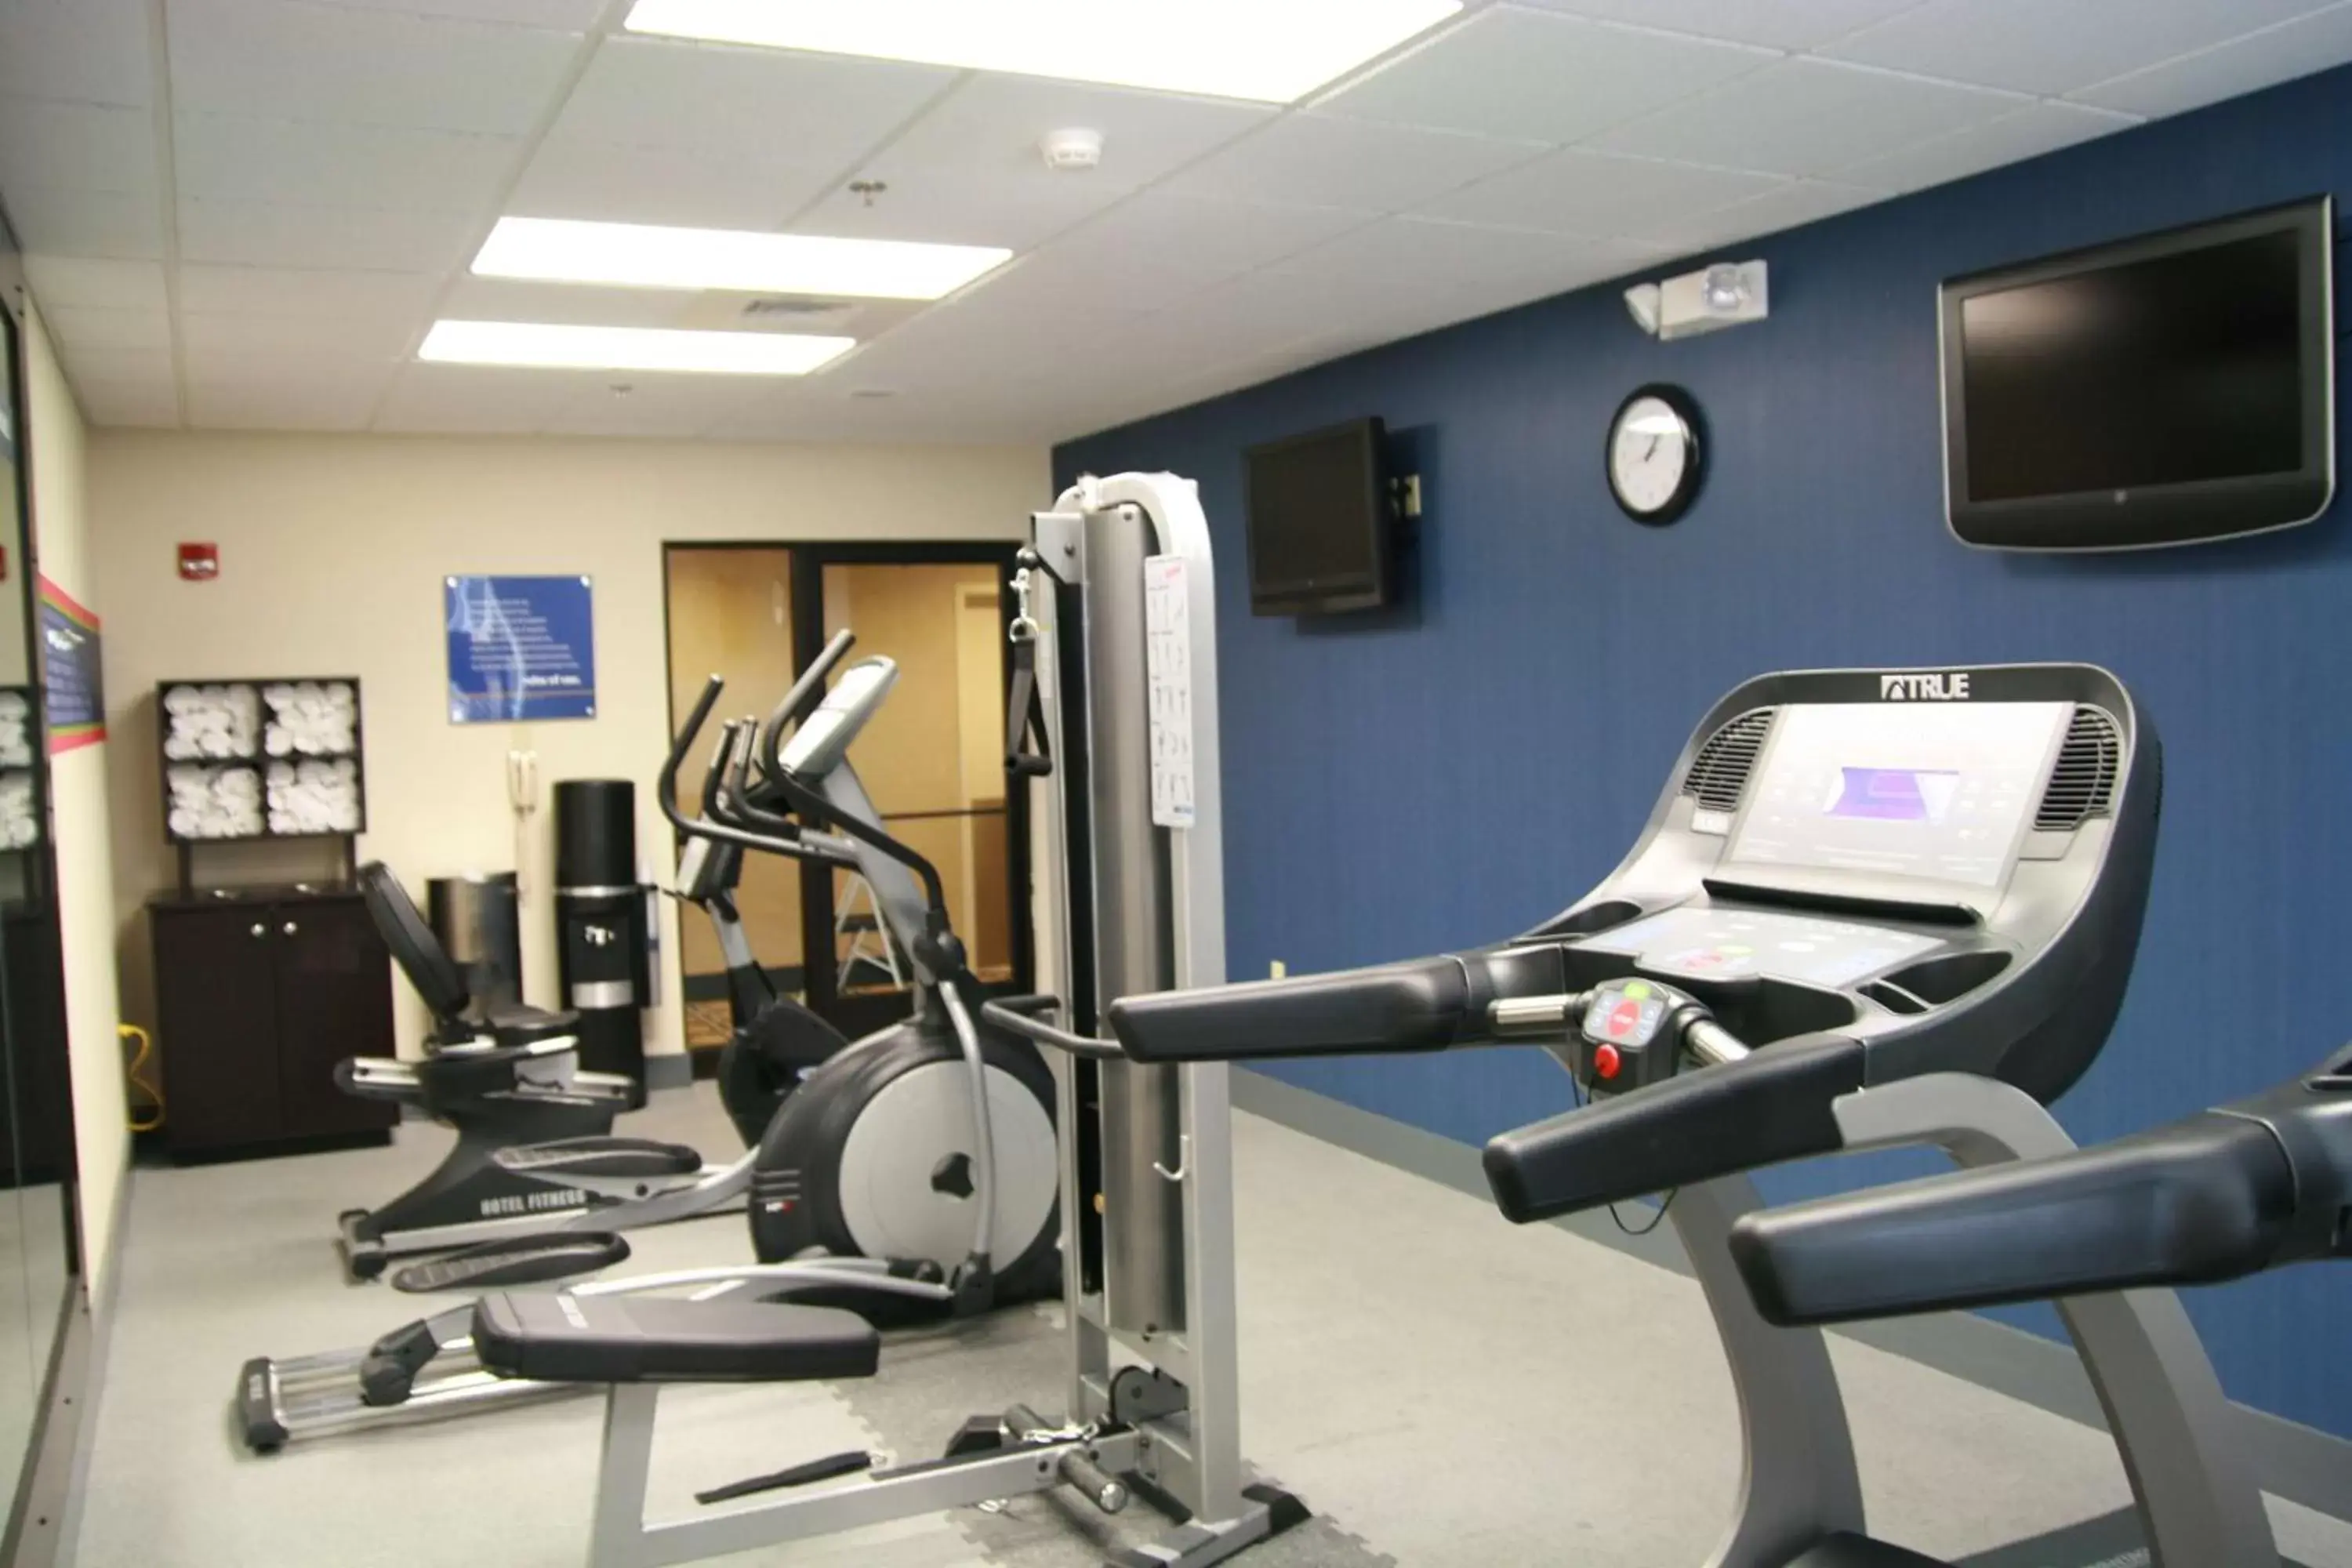 Fitness centre/facilities, Fitness Center/Facilities in Hampton Inn Topeka